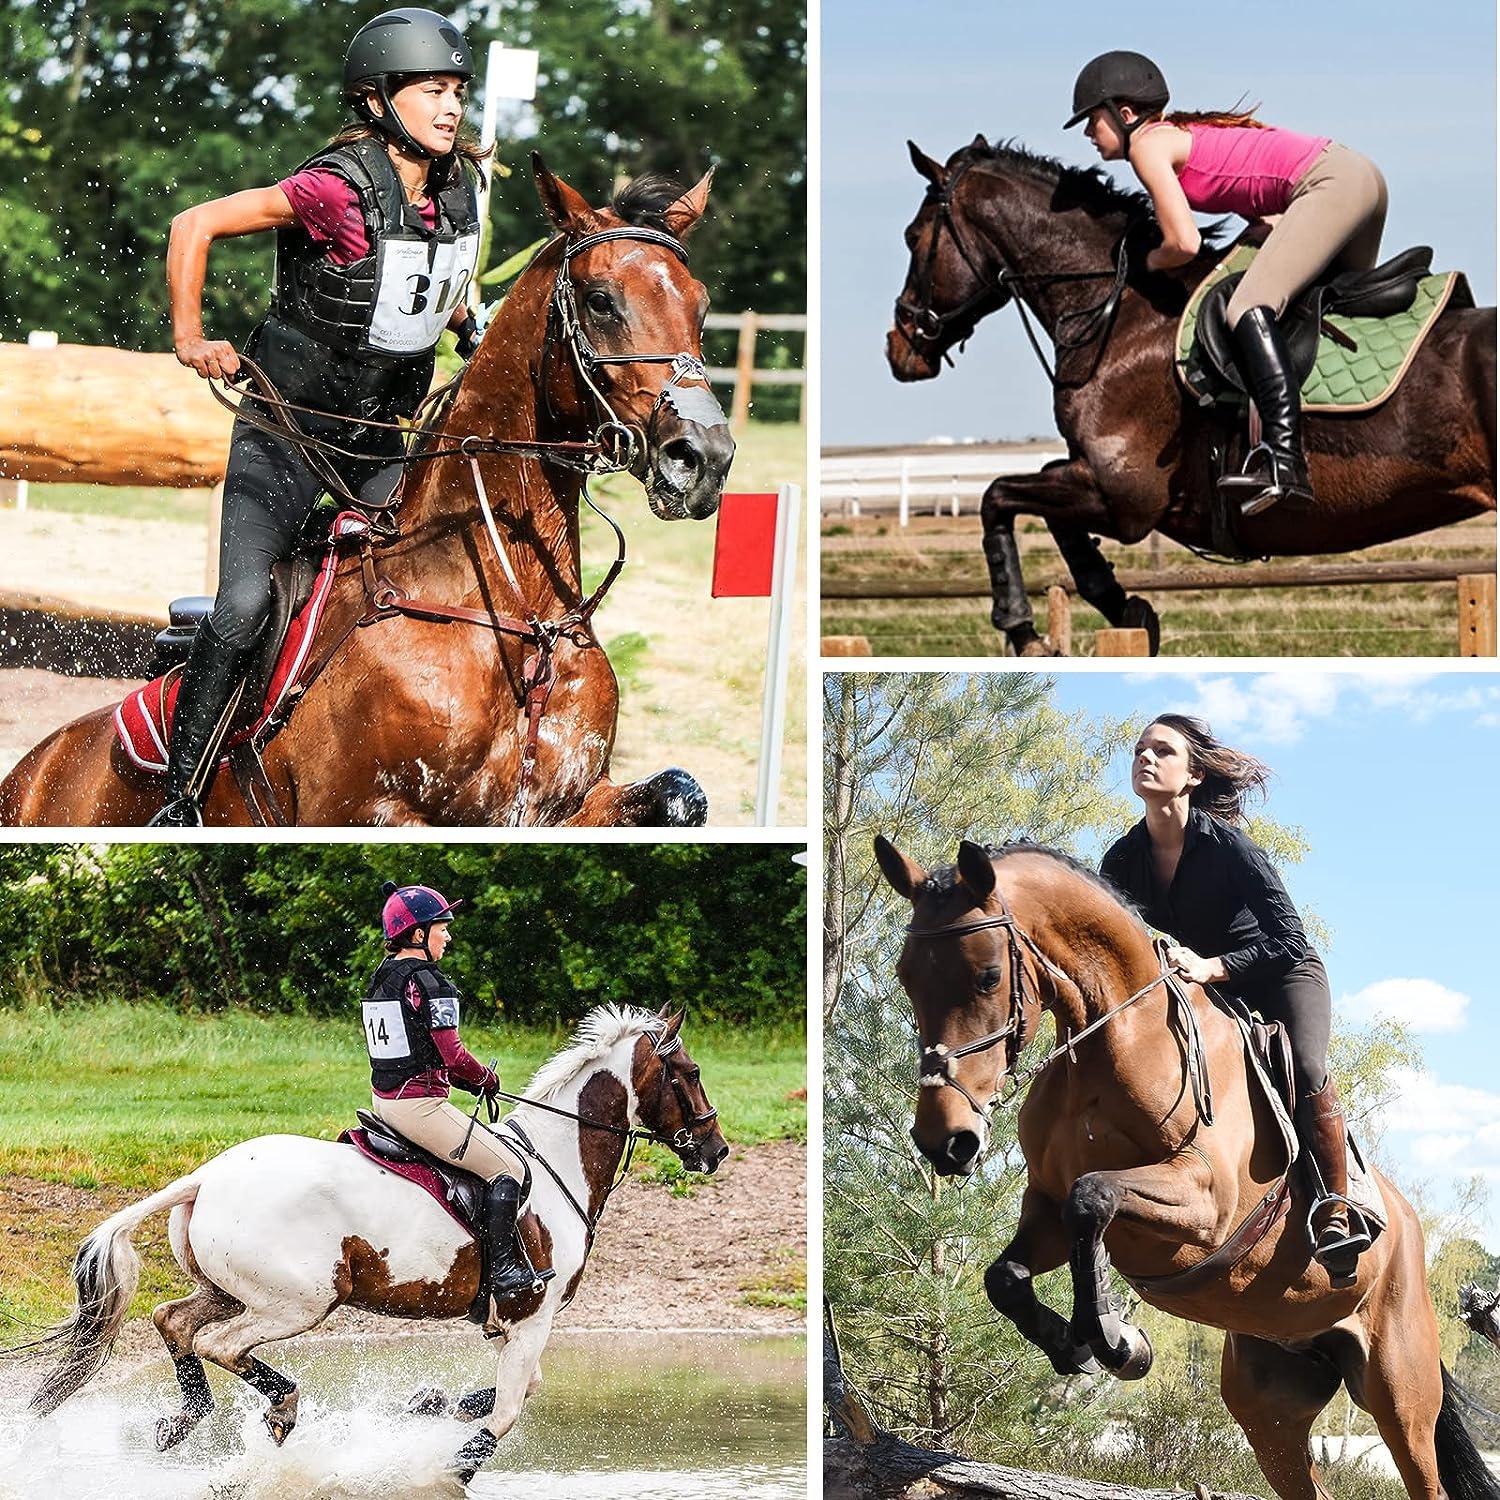  beroy Horseback Riding-Pants Girls Equestrian-Breeches